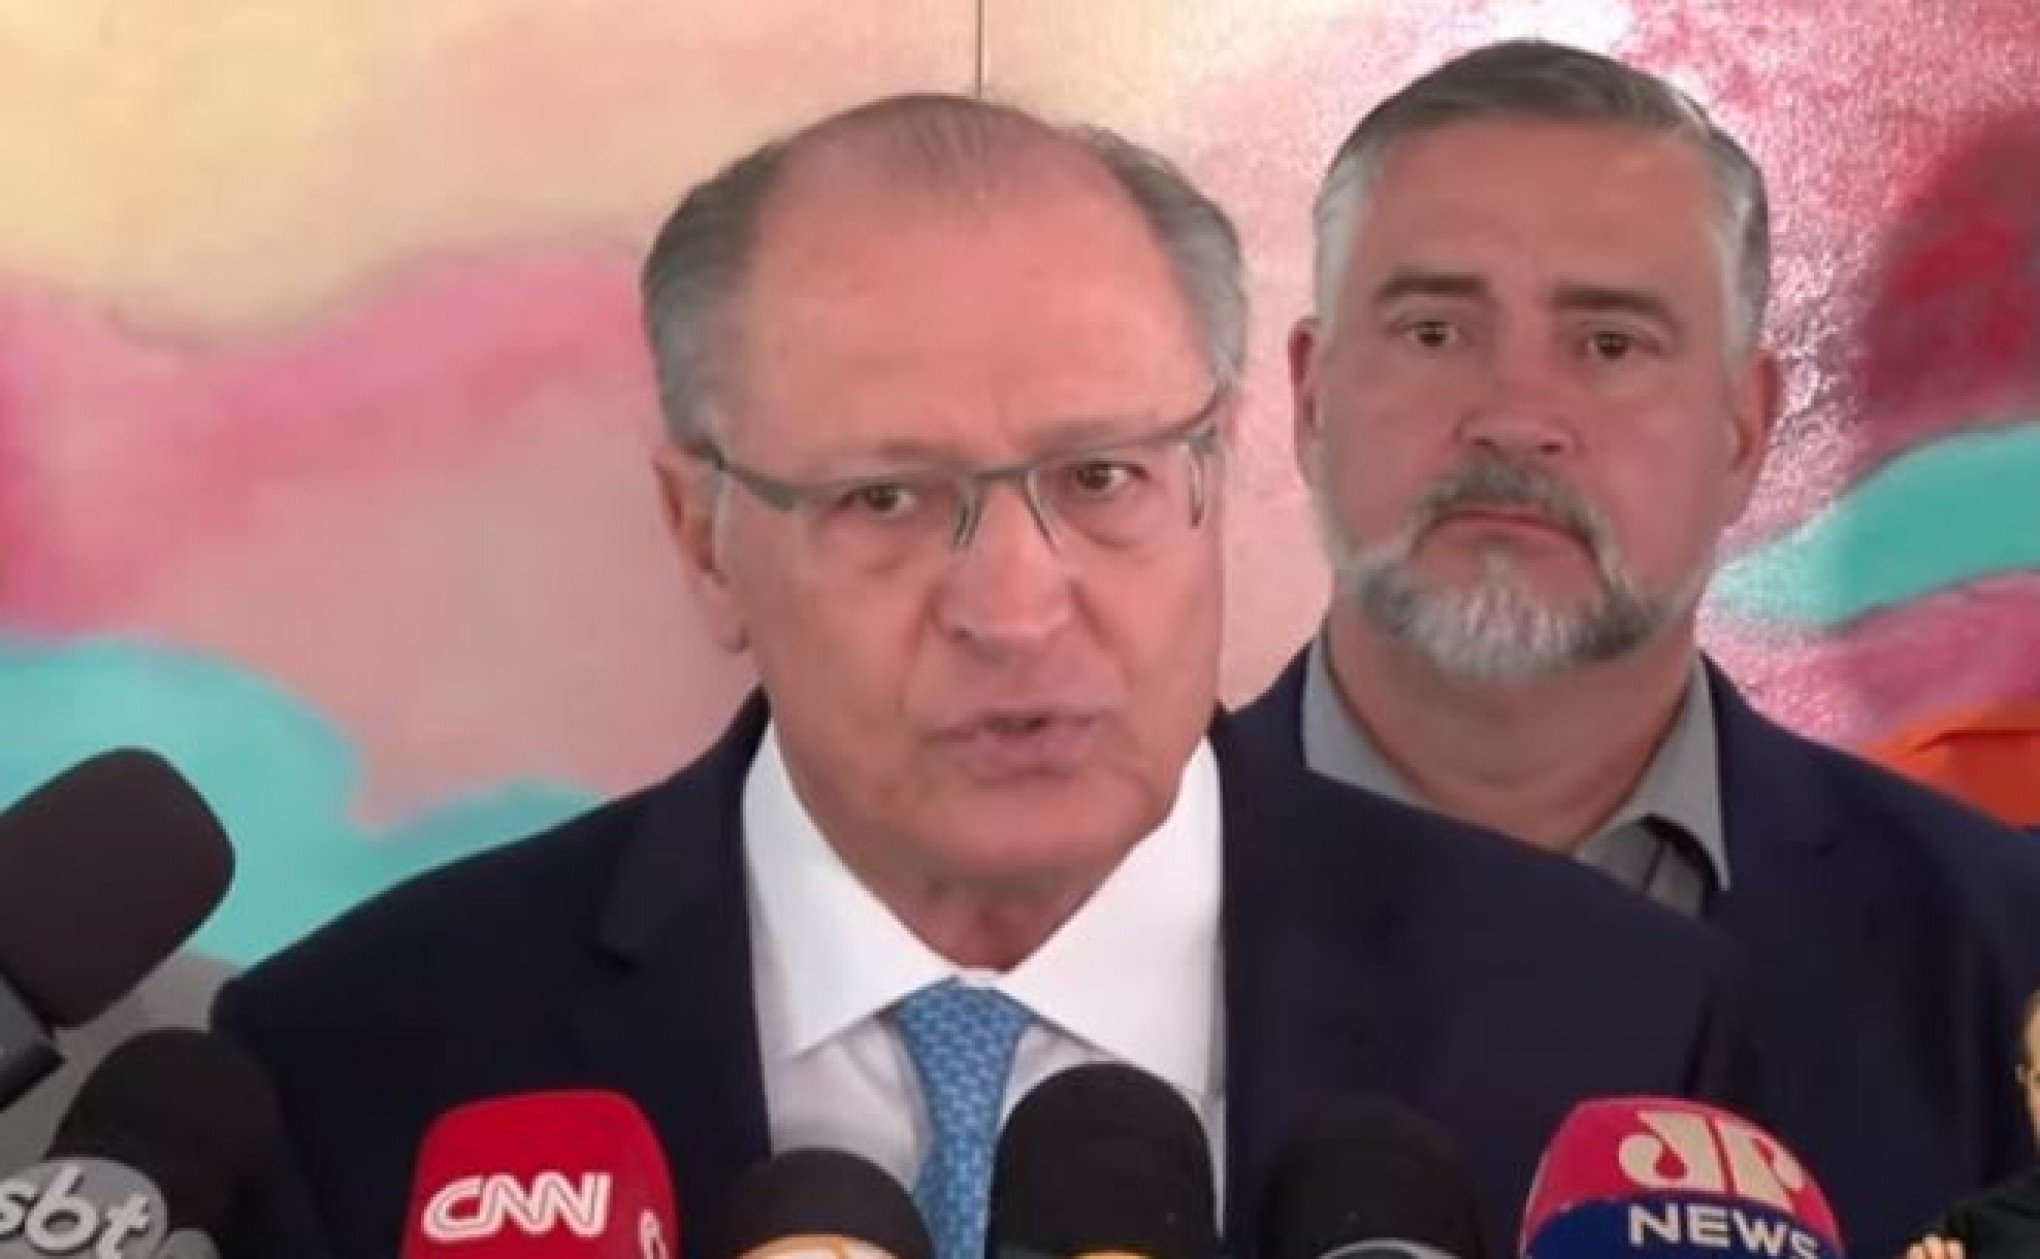 AO VIVO: Alckmin fala sobre catástrofe que deixou 41 mortos no RS